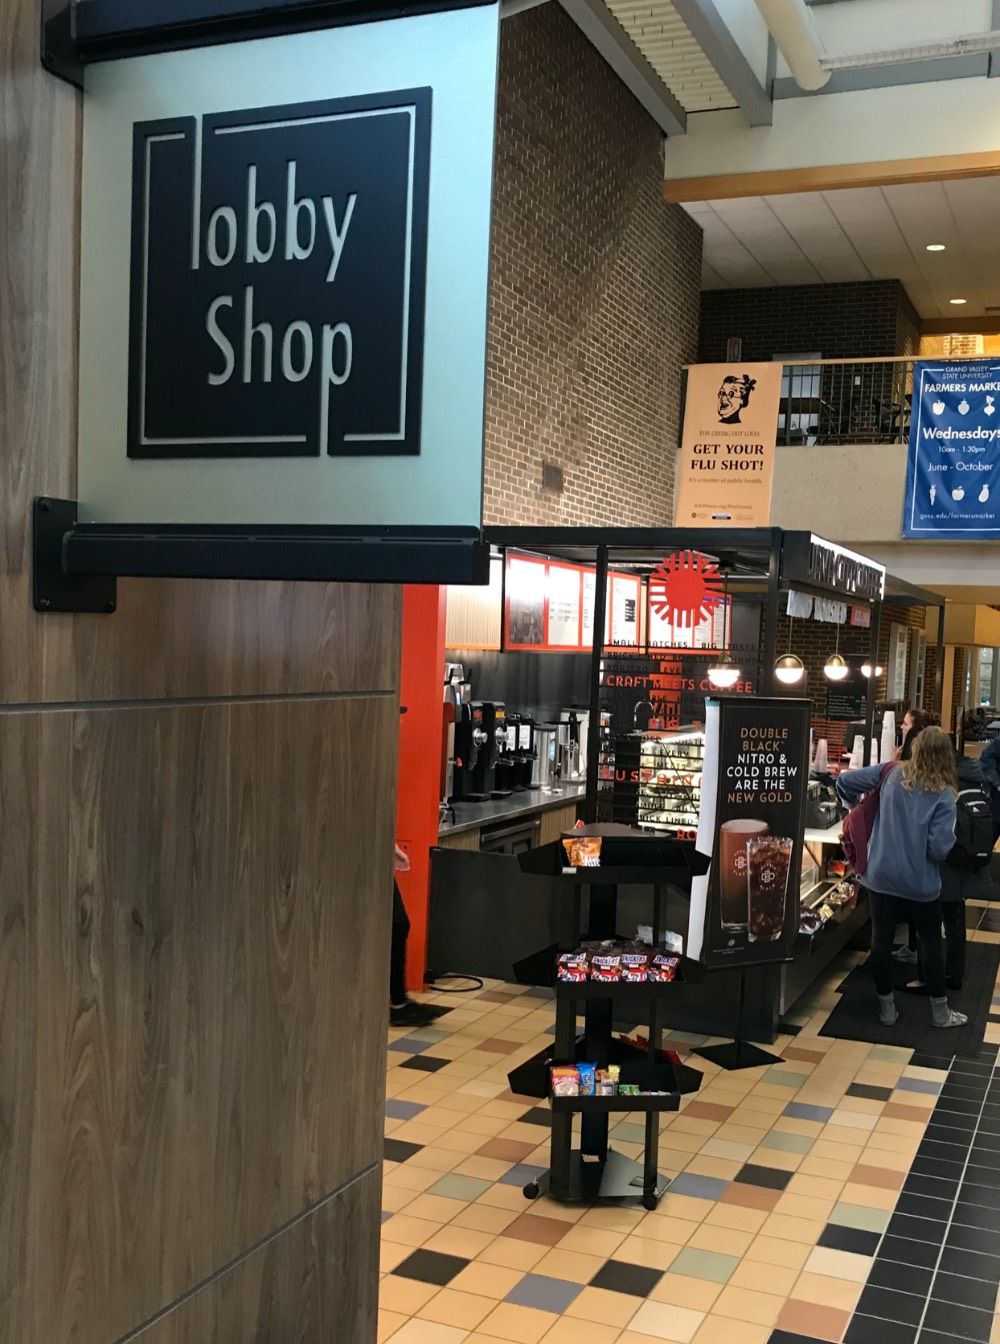 Lobby Shop Java City sign